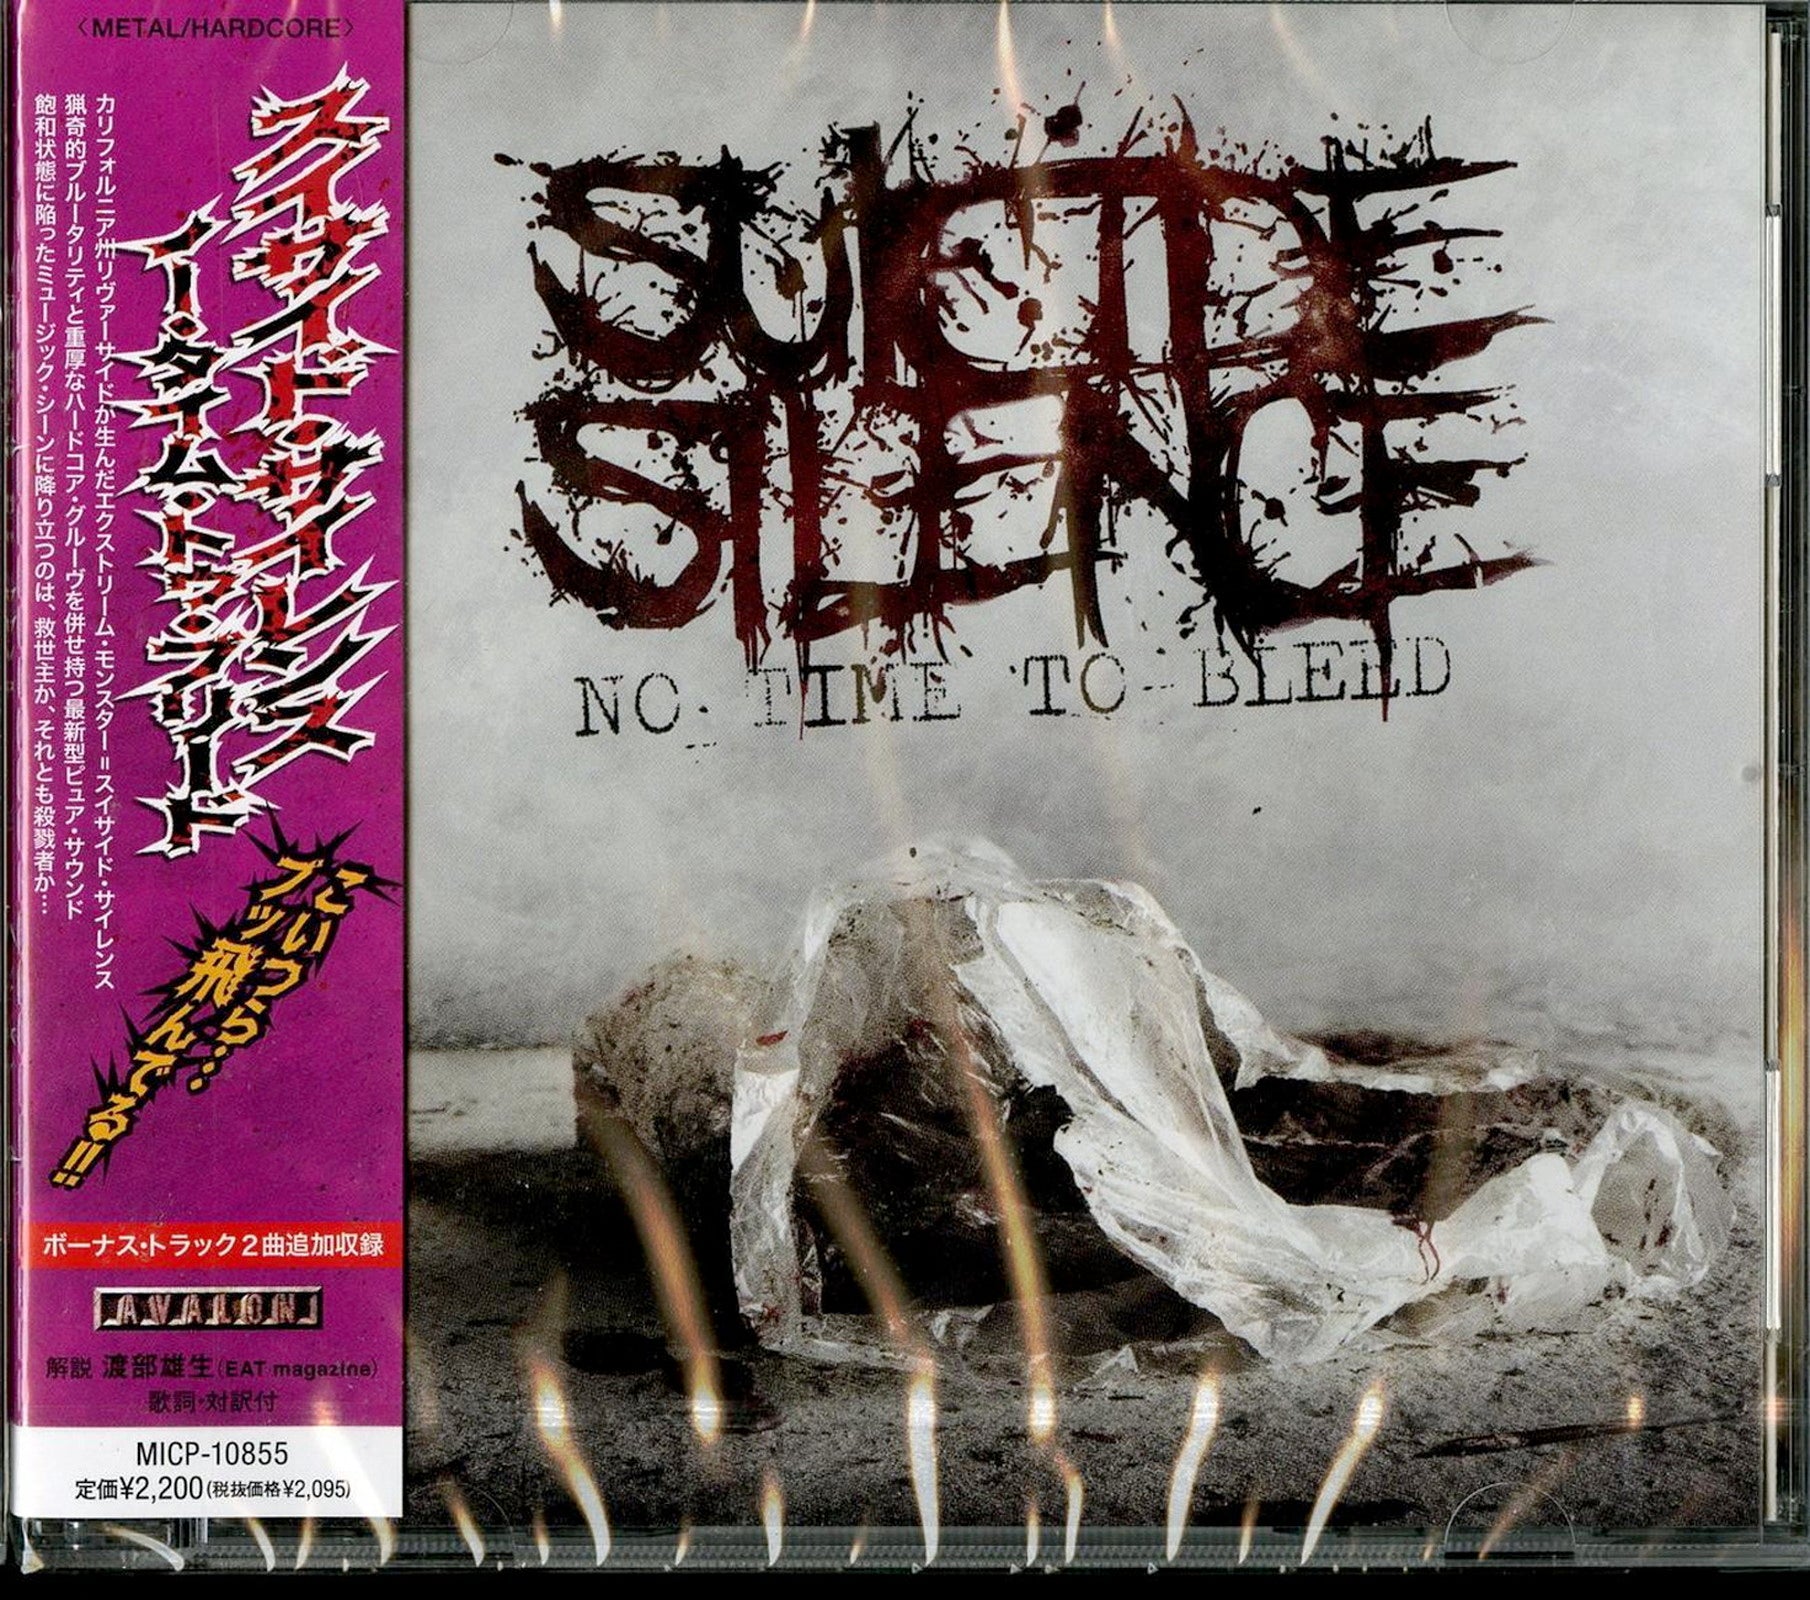 Suicide Silence - No Time To Bleed - Japan CD Bonus Track – CDs Vinyl Japan  Store 2009